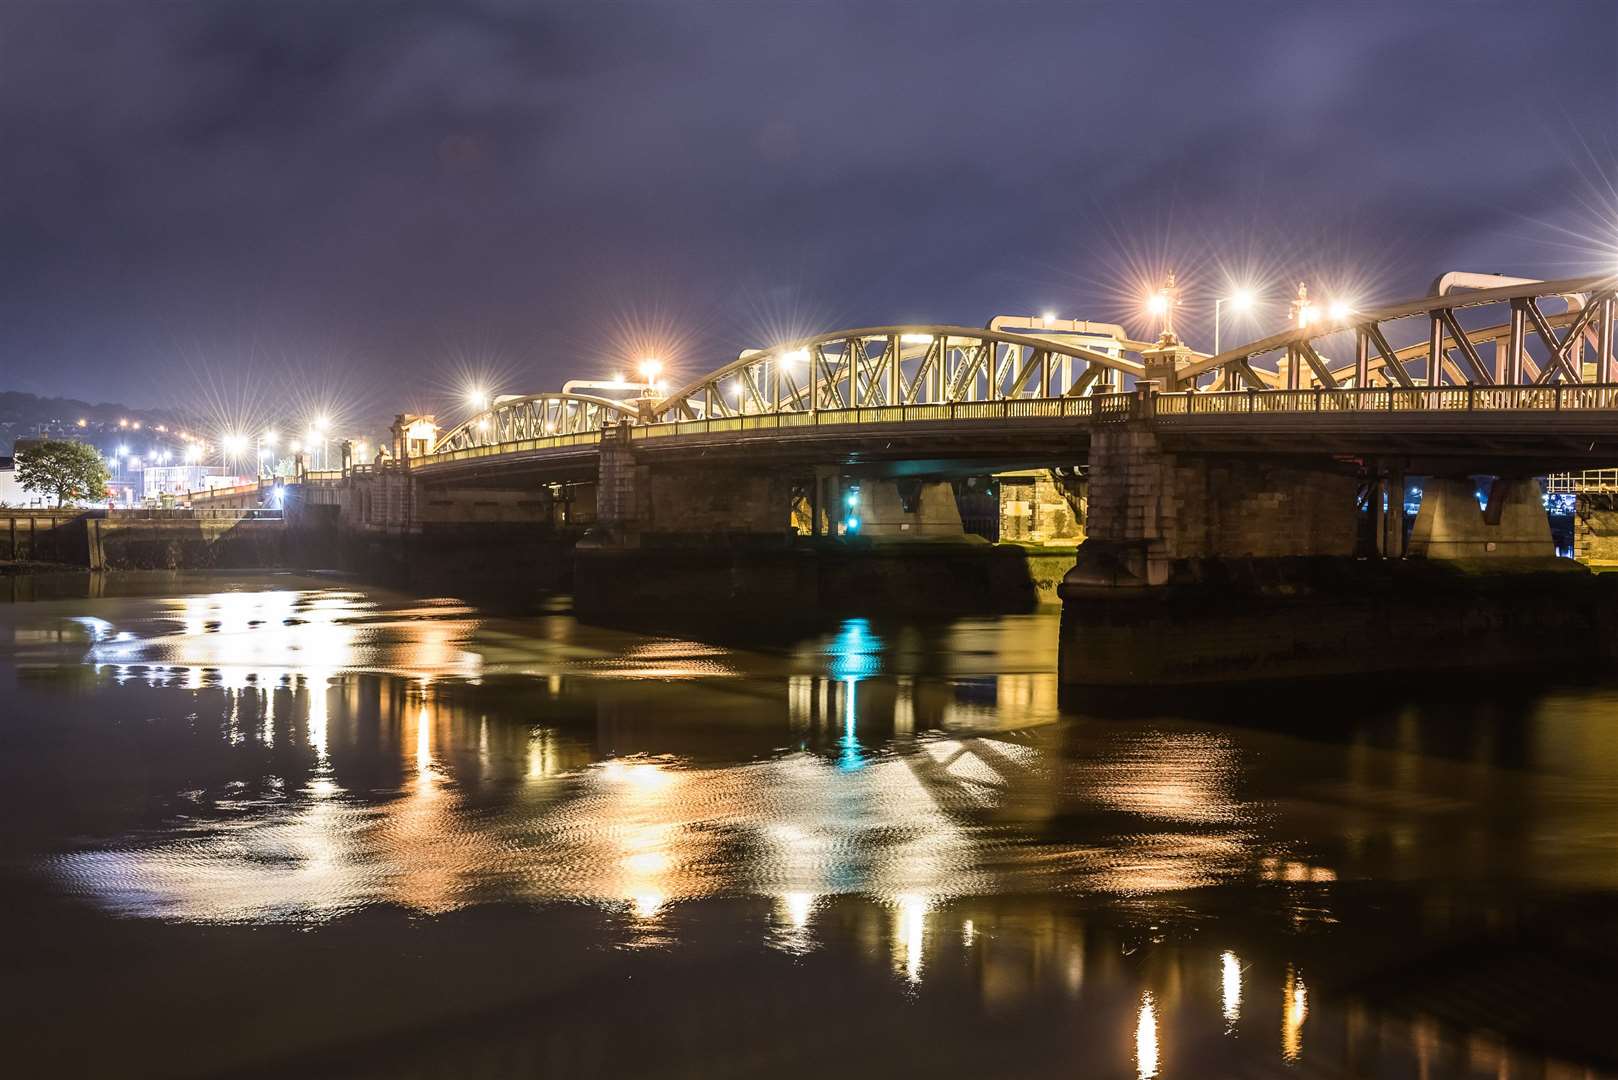 The Old Bridge at night (10005793)